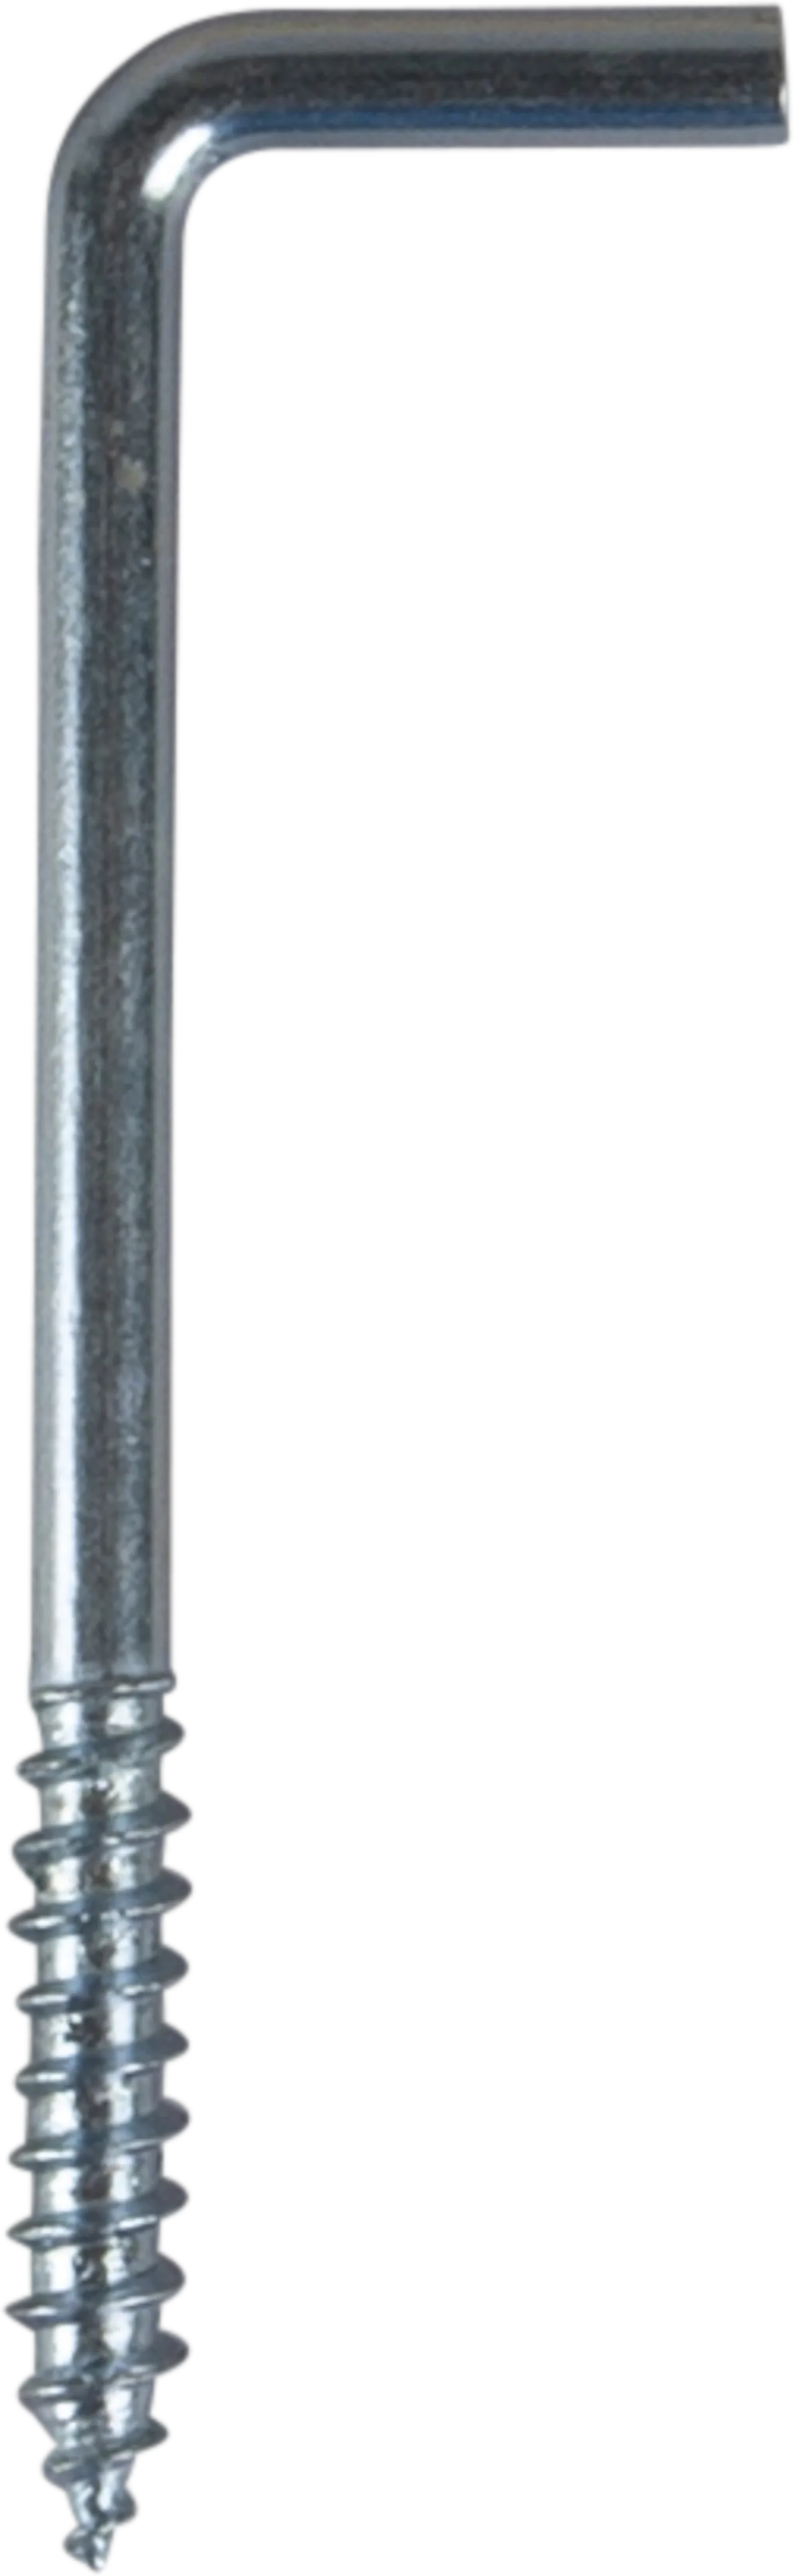 Vinkelkrok 7 60x3,5mm fzb a-6essve null - null - 3 - Miniatyr